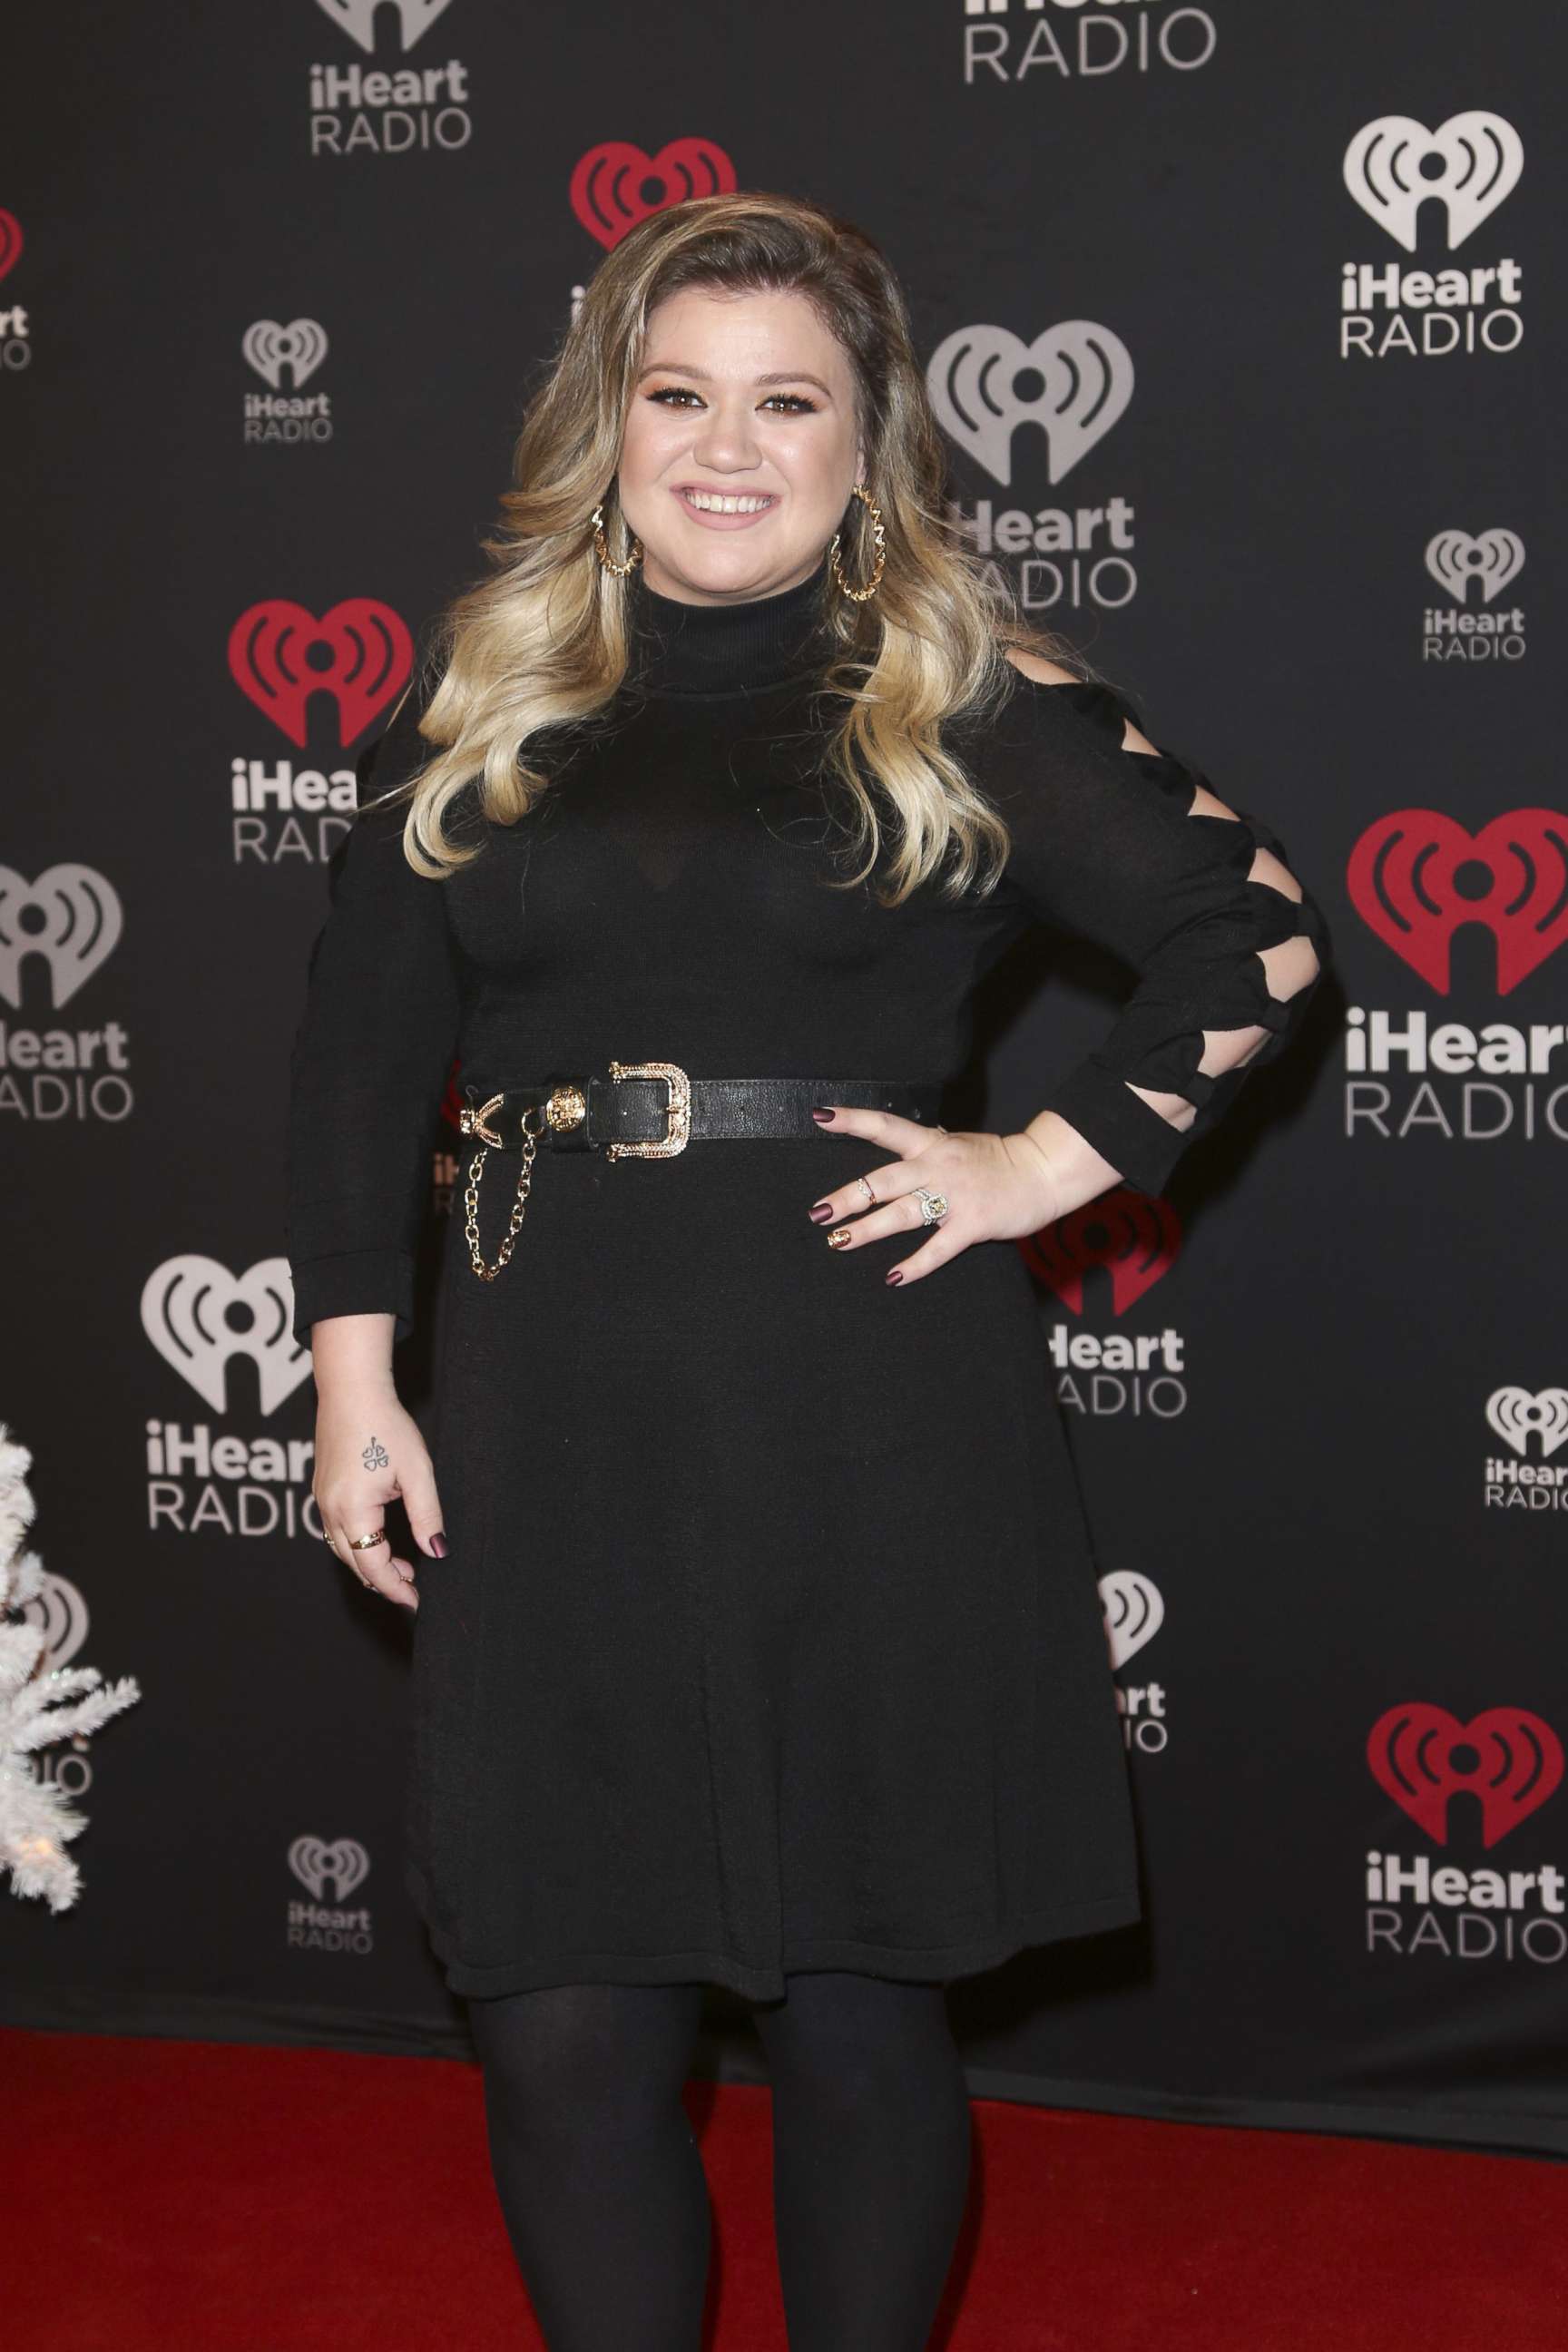 PHOTO: Kelly Clarkson at the iHeartRadio Jingle Ball in Toronto, Dec. 9, 2017.